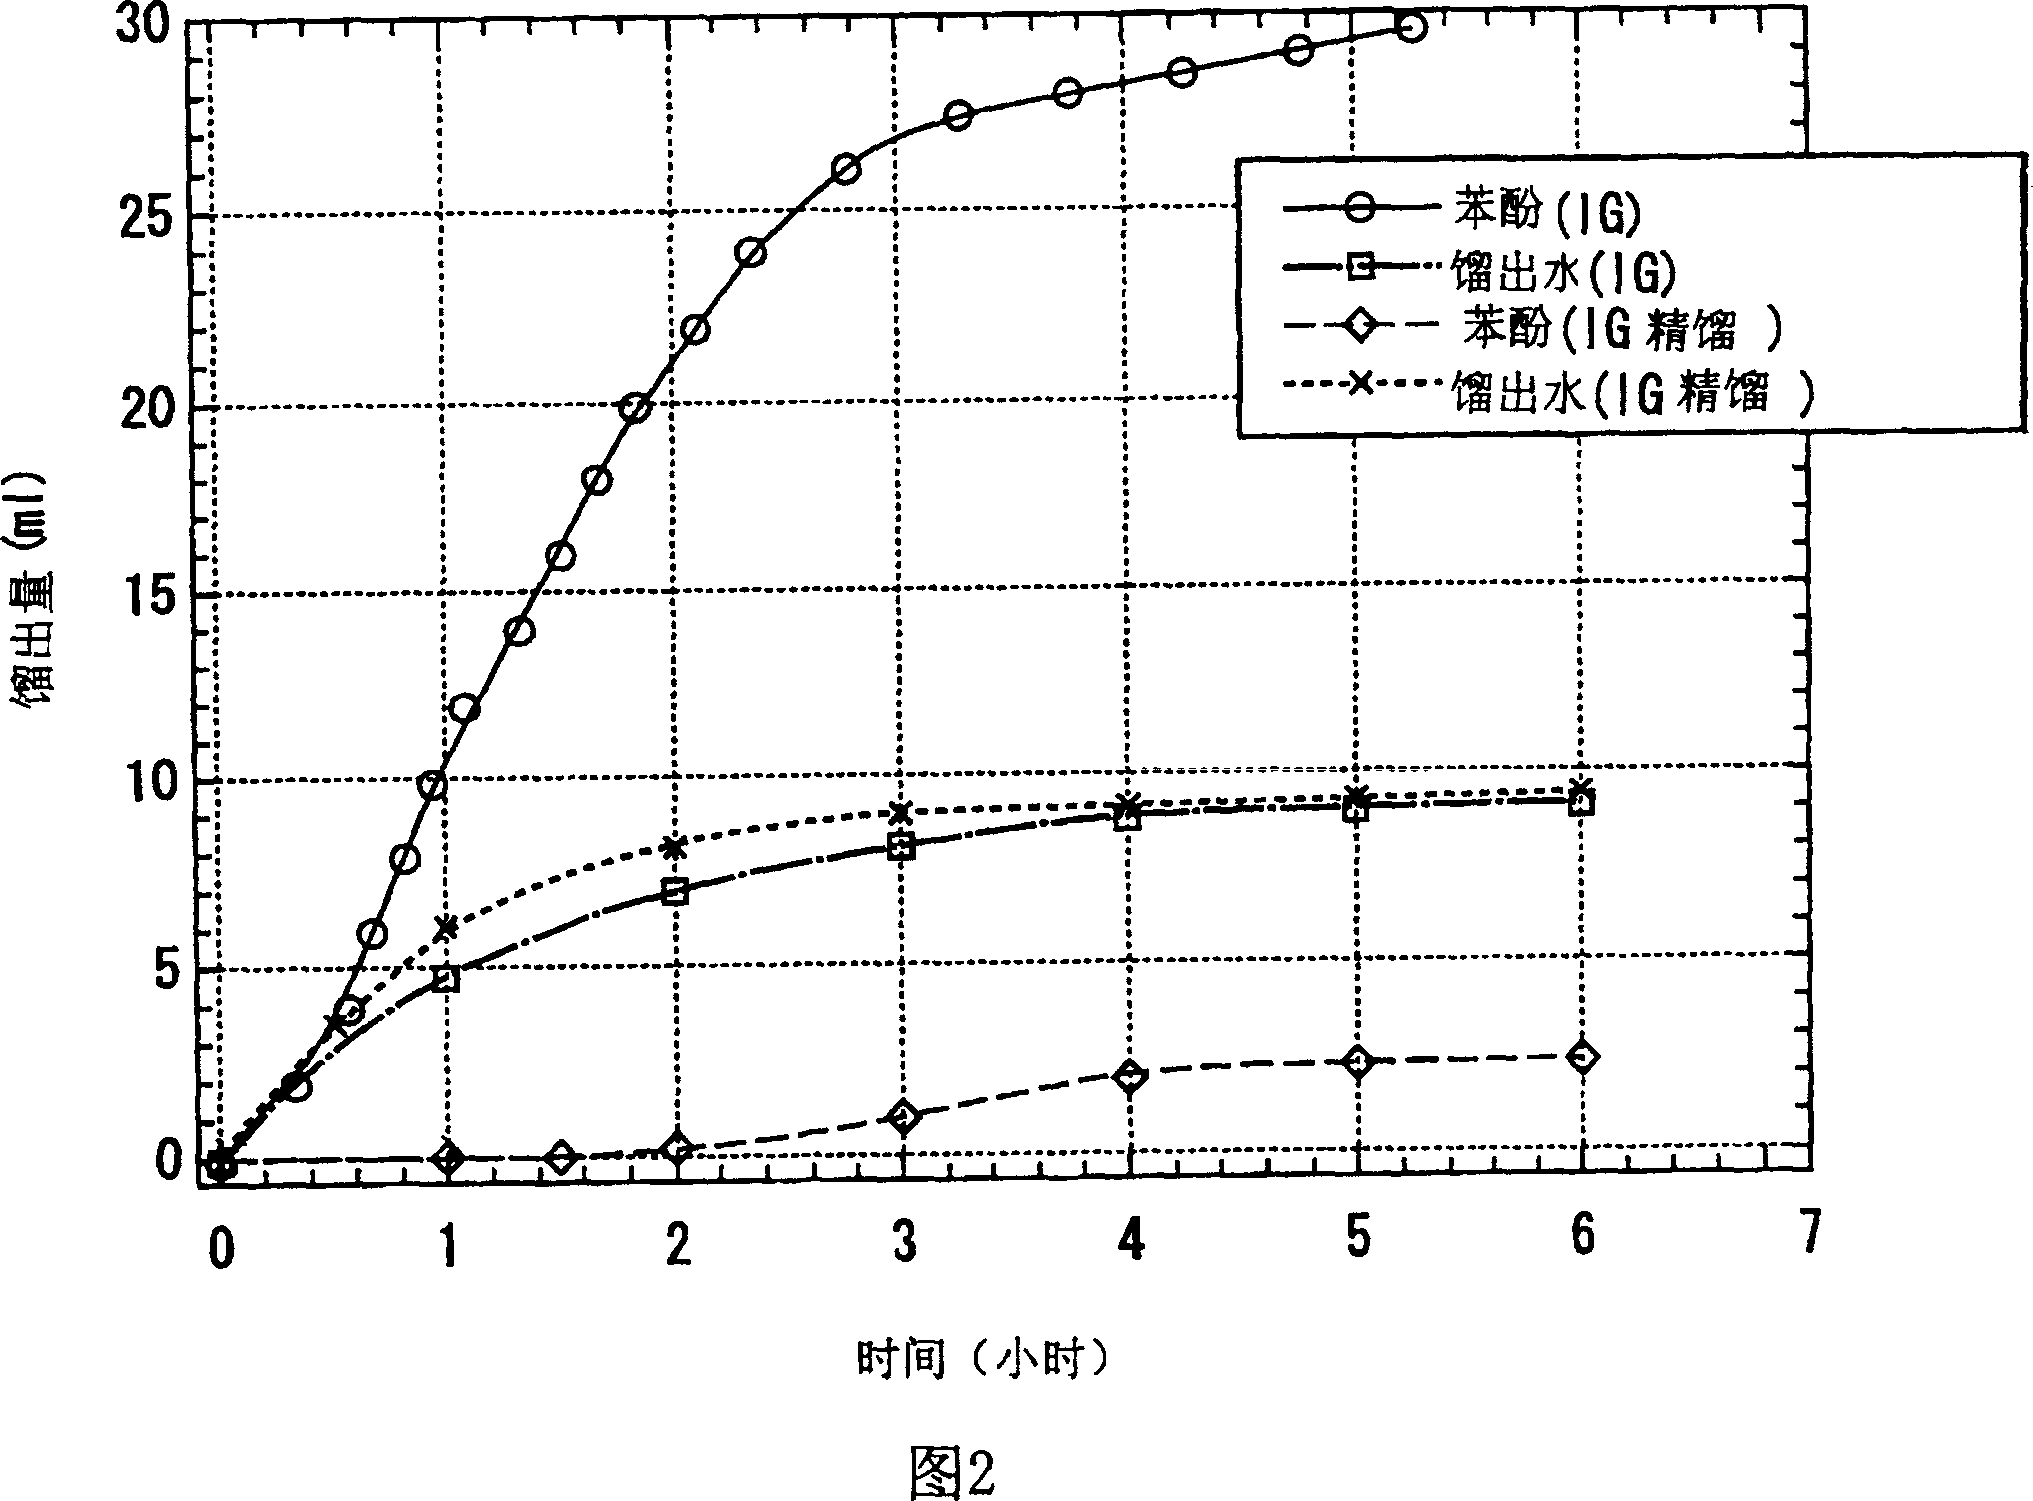 Production of 4,4'-bisphenol sulphone